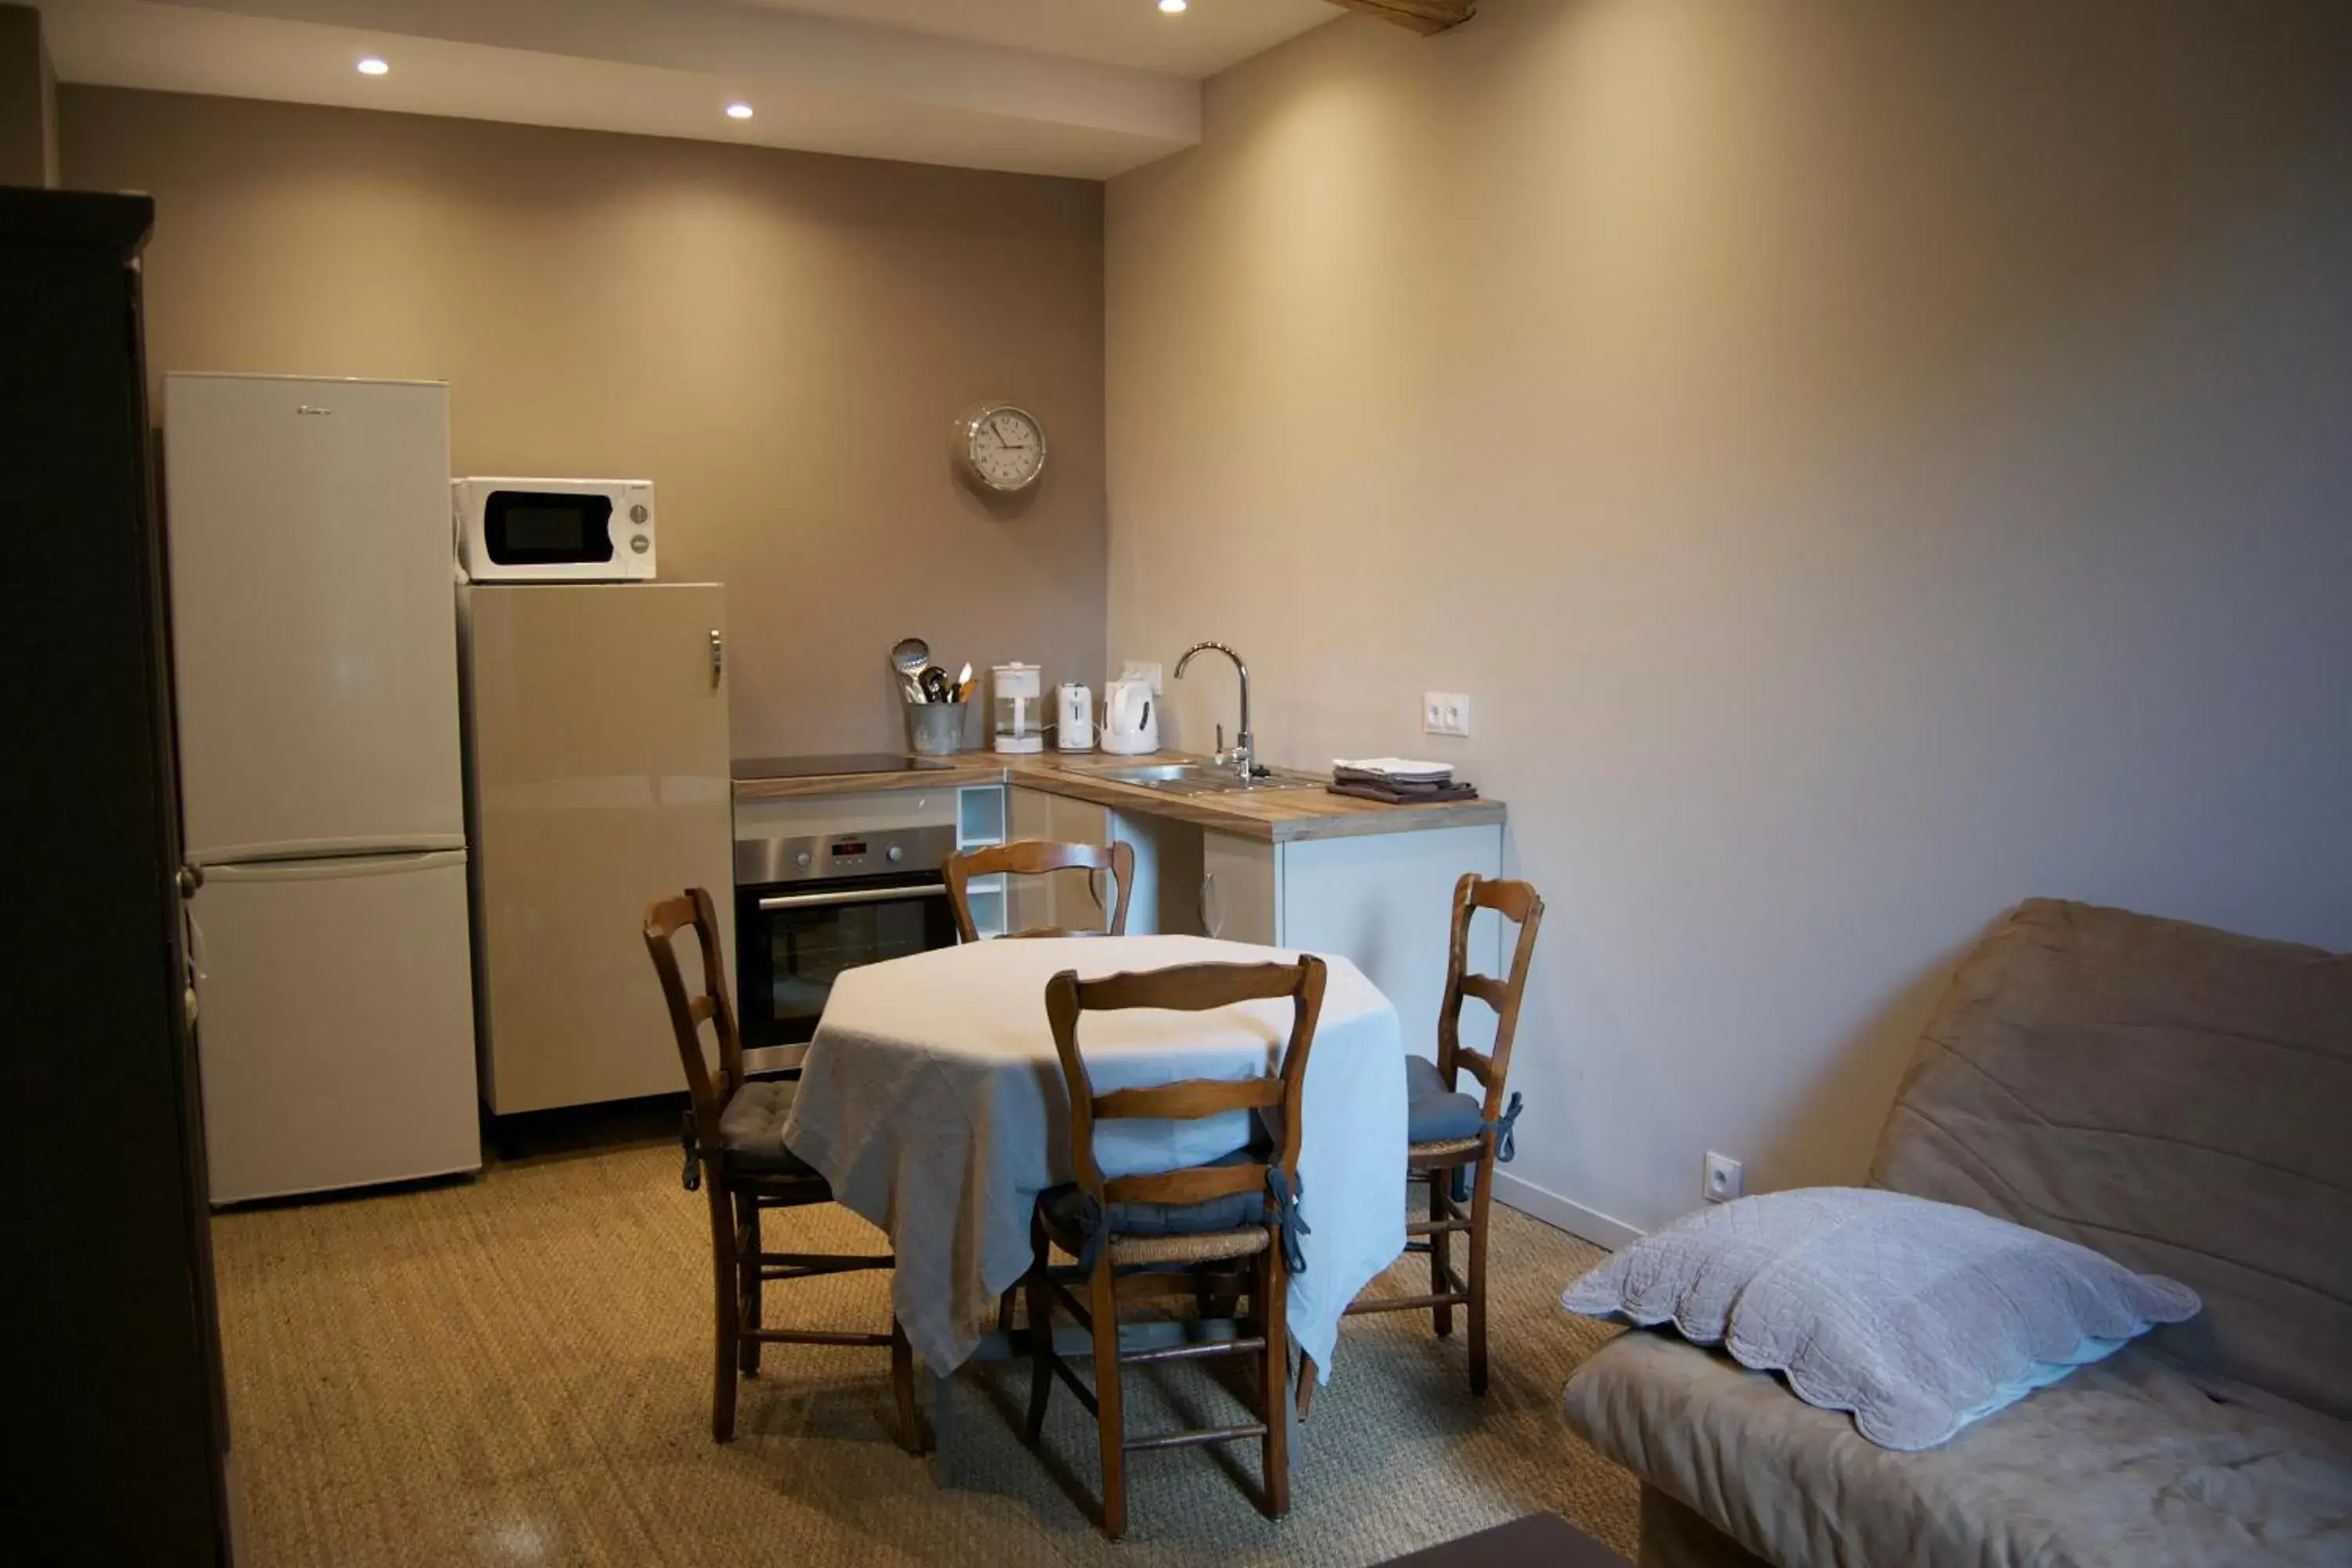 Kitchen or kitchenette, Dining Area in Appart'hôtel 27 le lion d'or